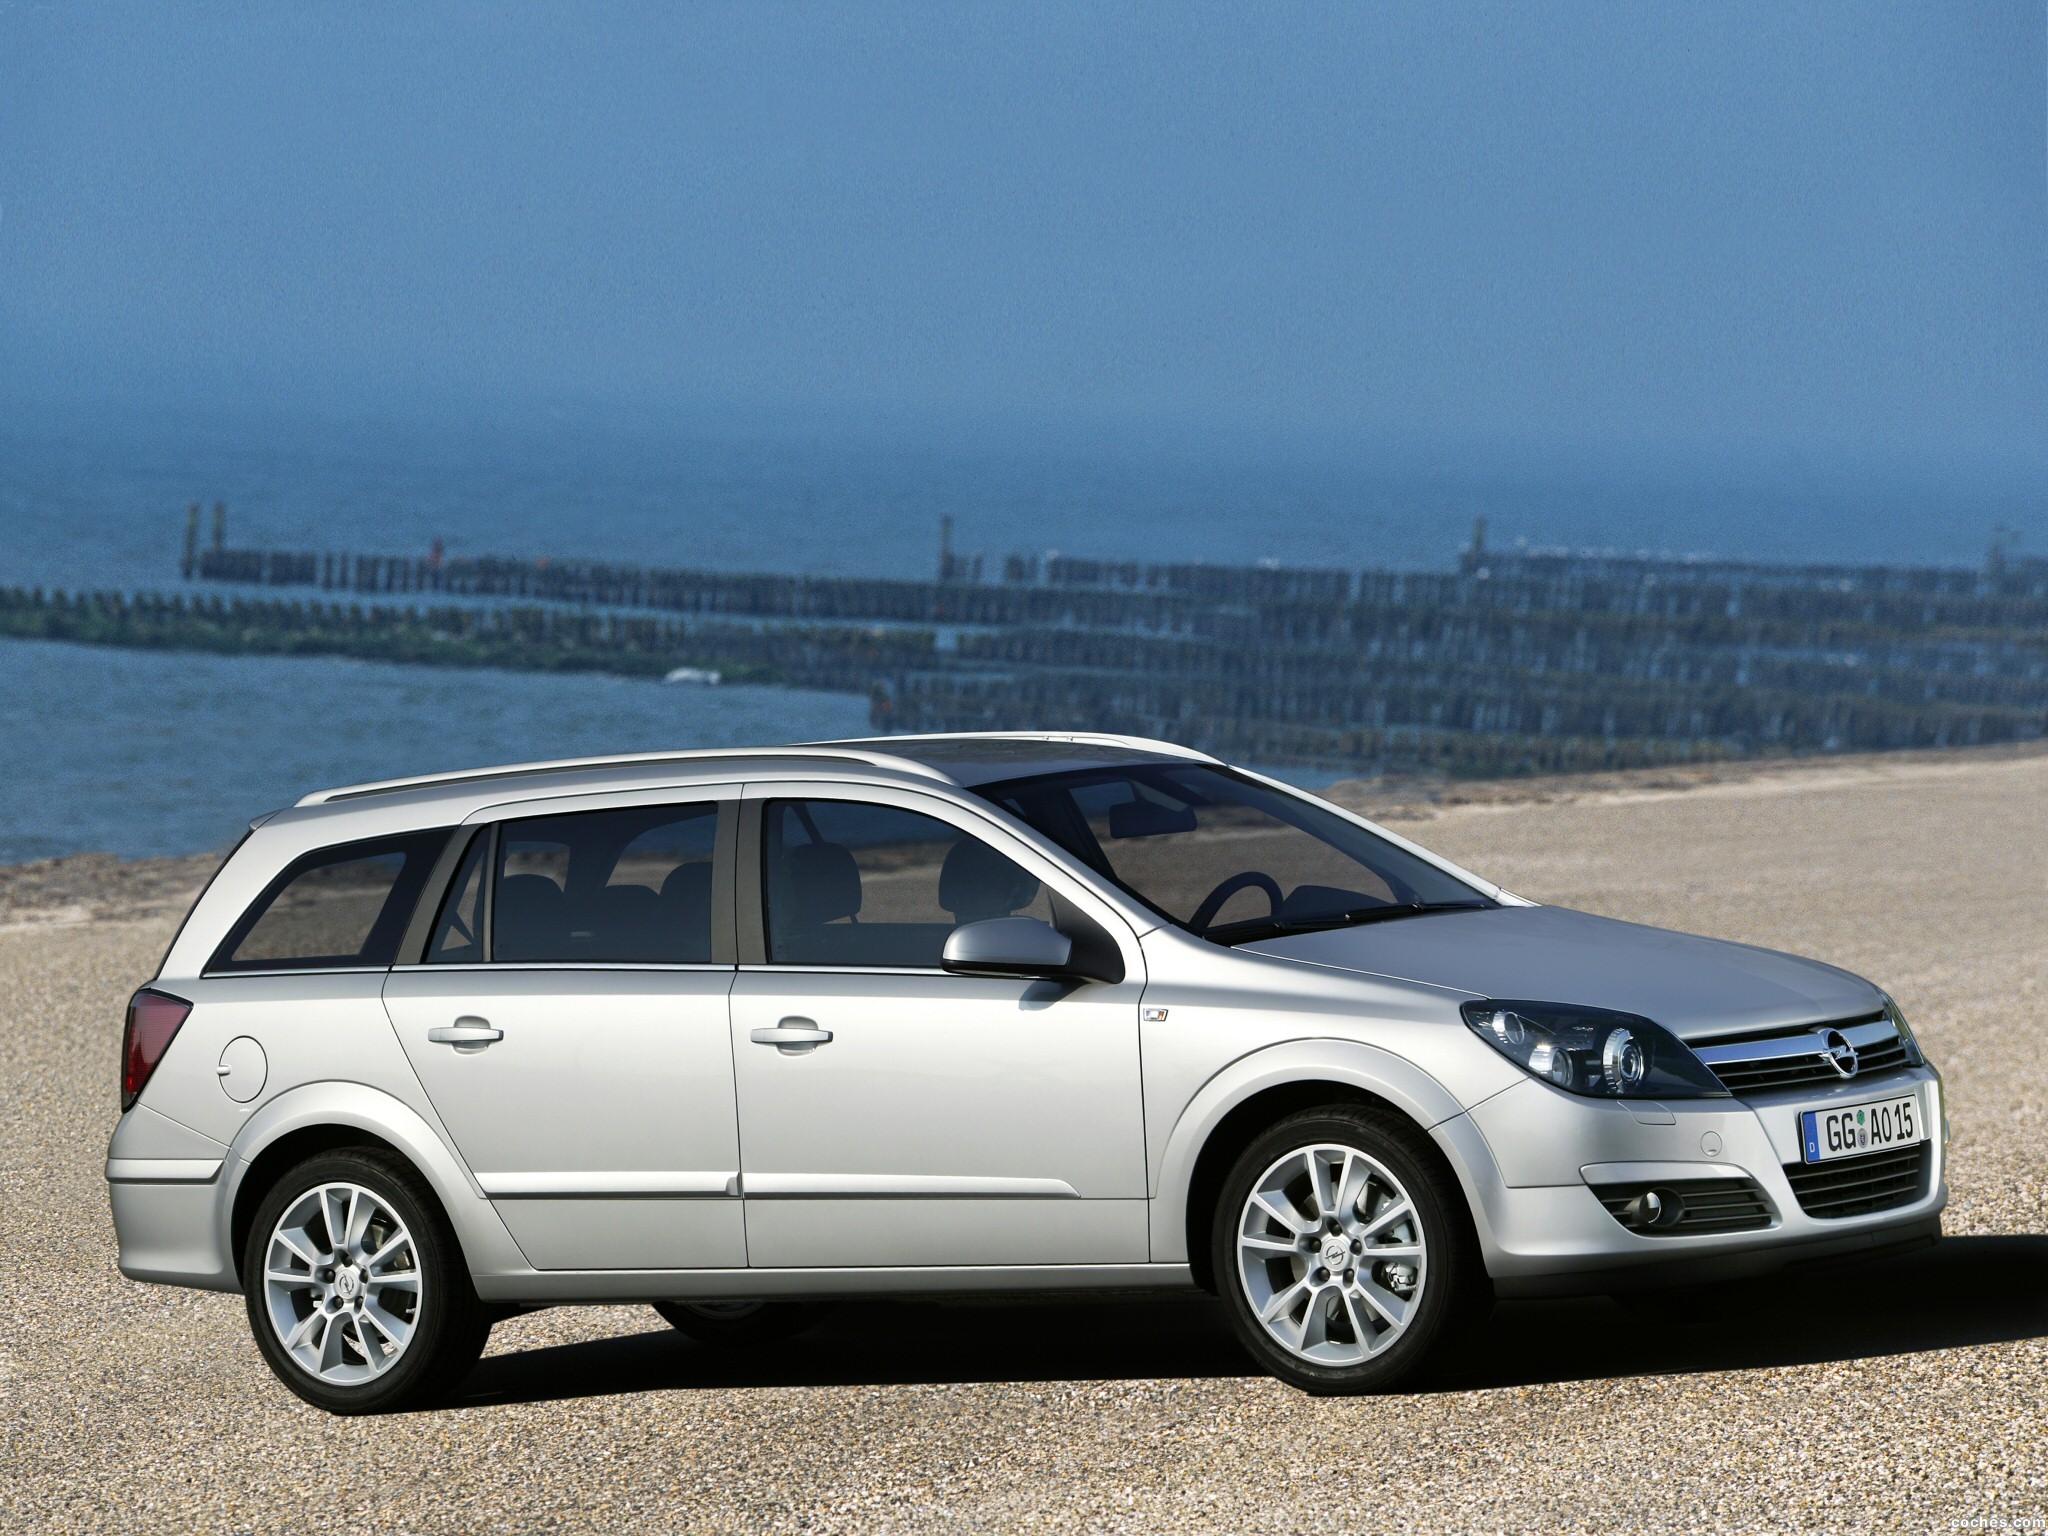 Опель универсал 1.4. Opel Astra 2004 универсал. Opel Astra h Wagon 2004. Opel Astra h универсал 2004. Opel Astra Station Wagon.